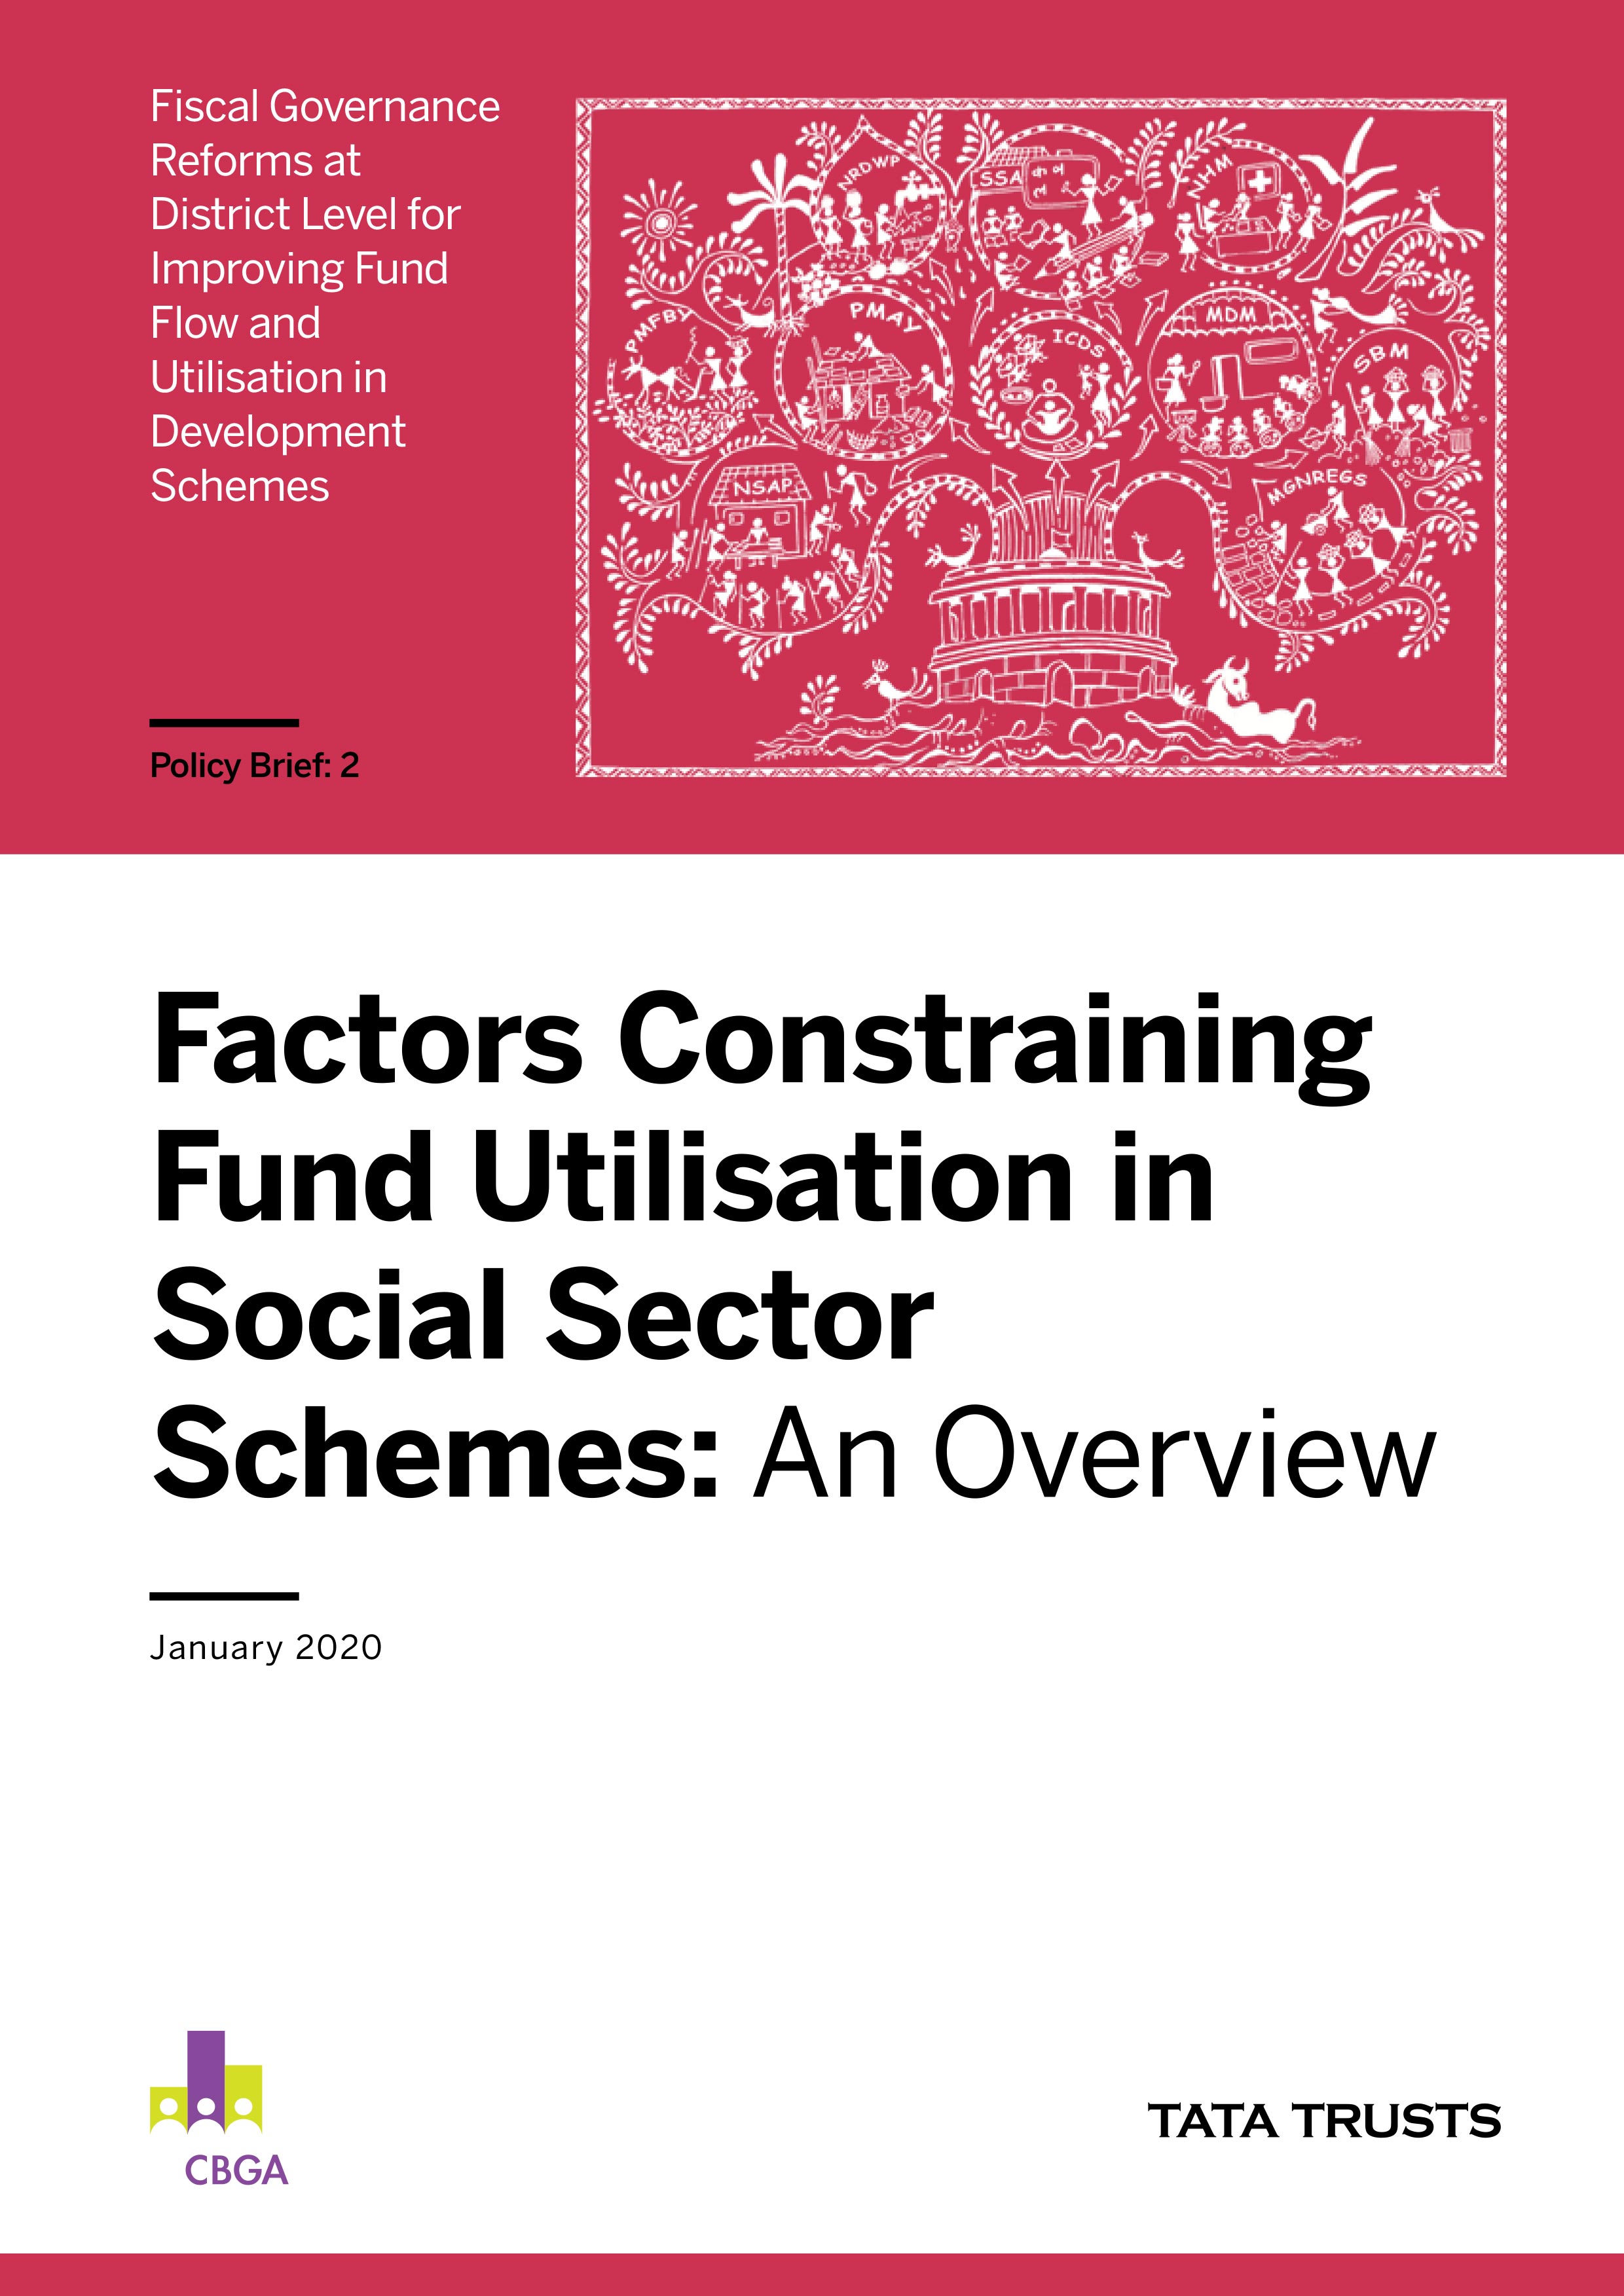 Factors Constraining Fund Utilisation in Social Sector-Policy Brief